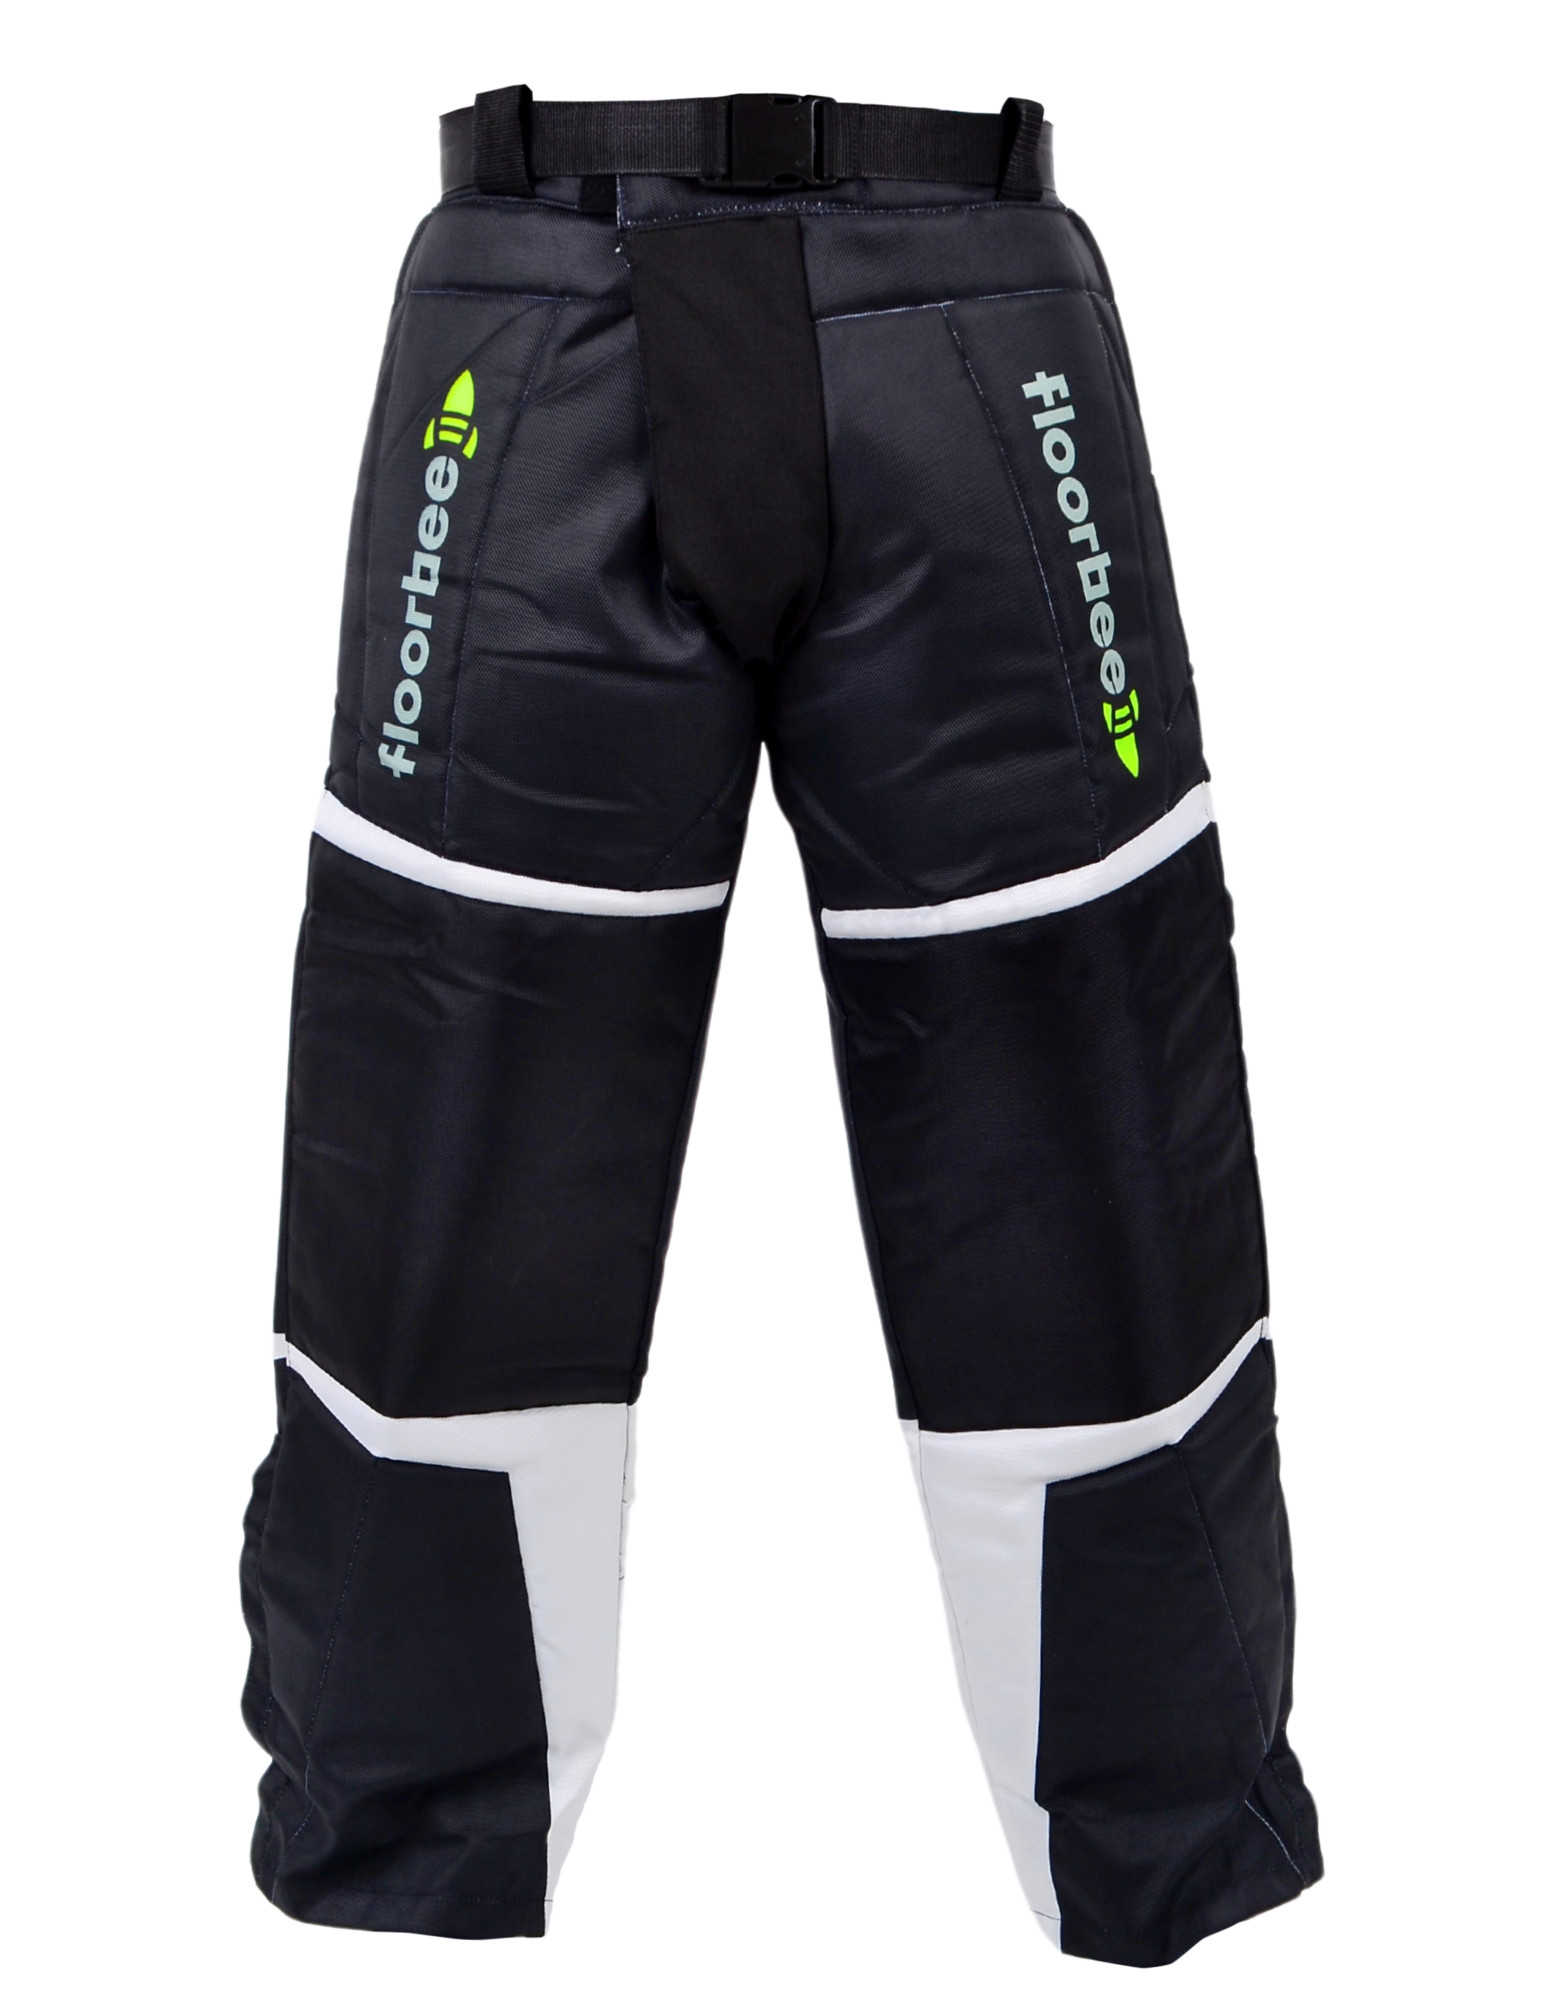 FLOORBEE Goalie Armor Pants 3.0 - black/white 140 cm, černá / bílá